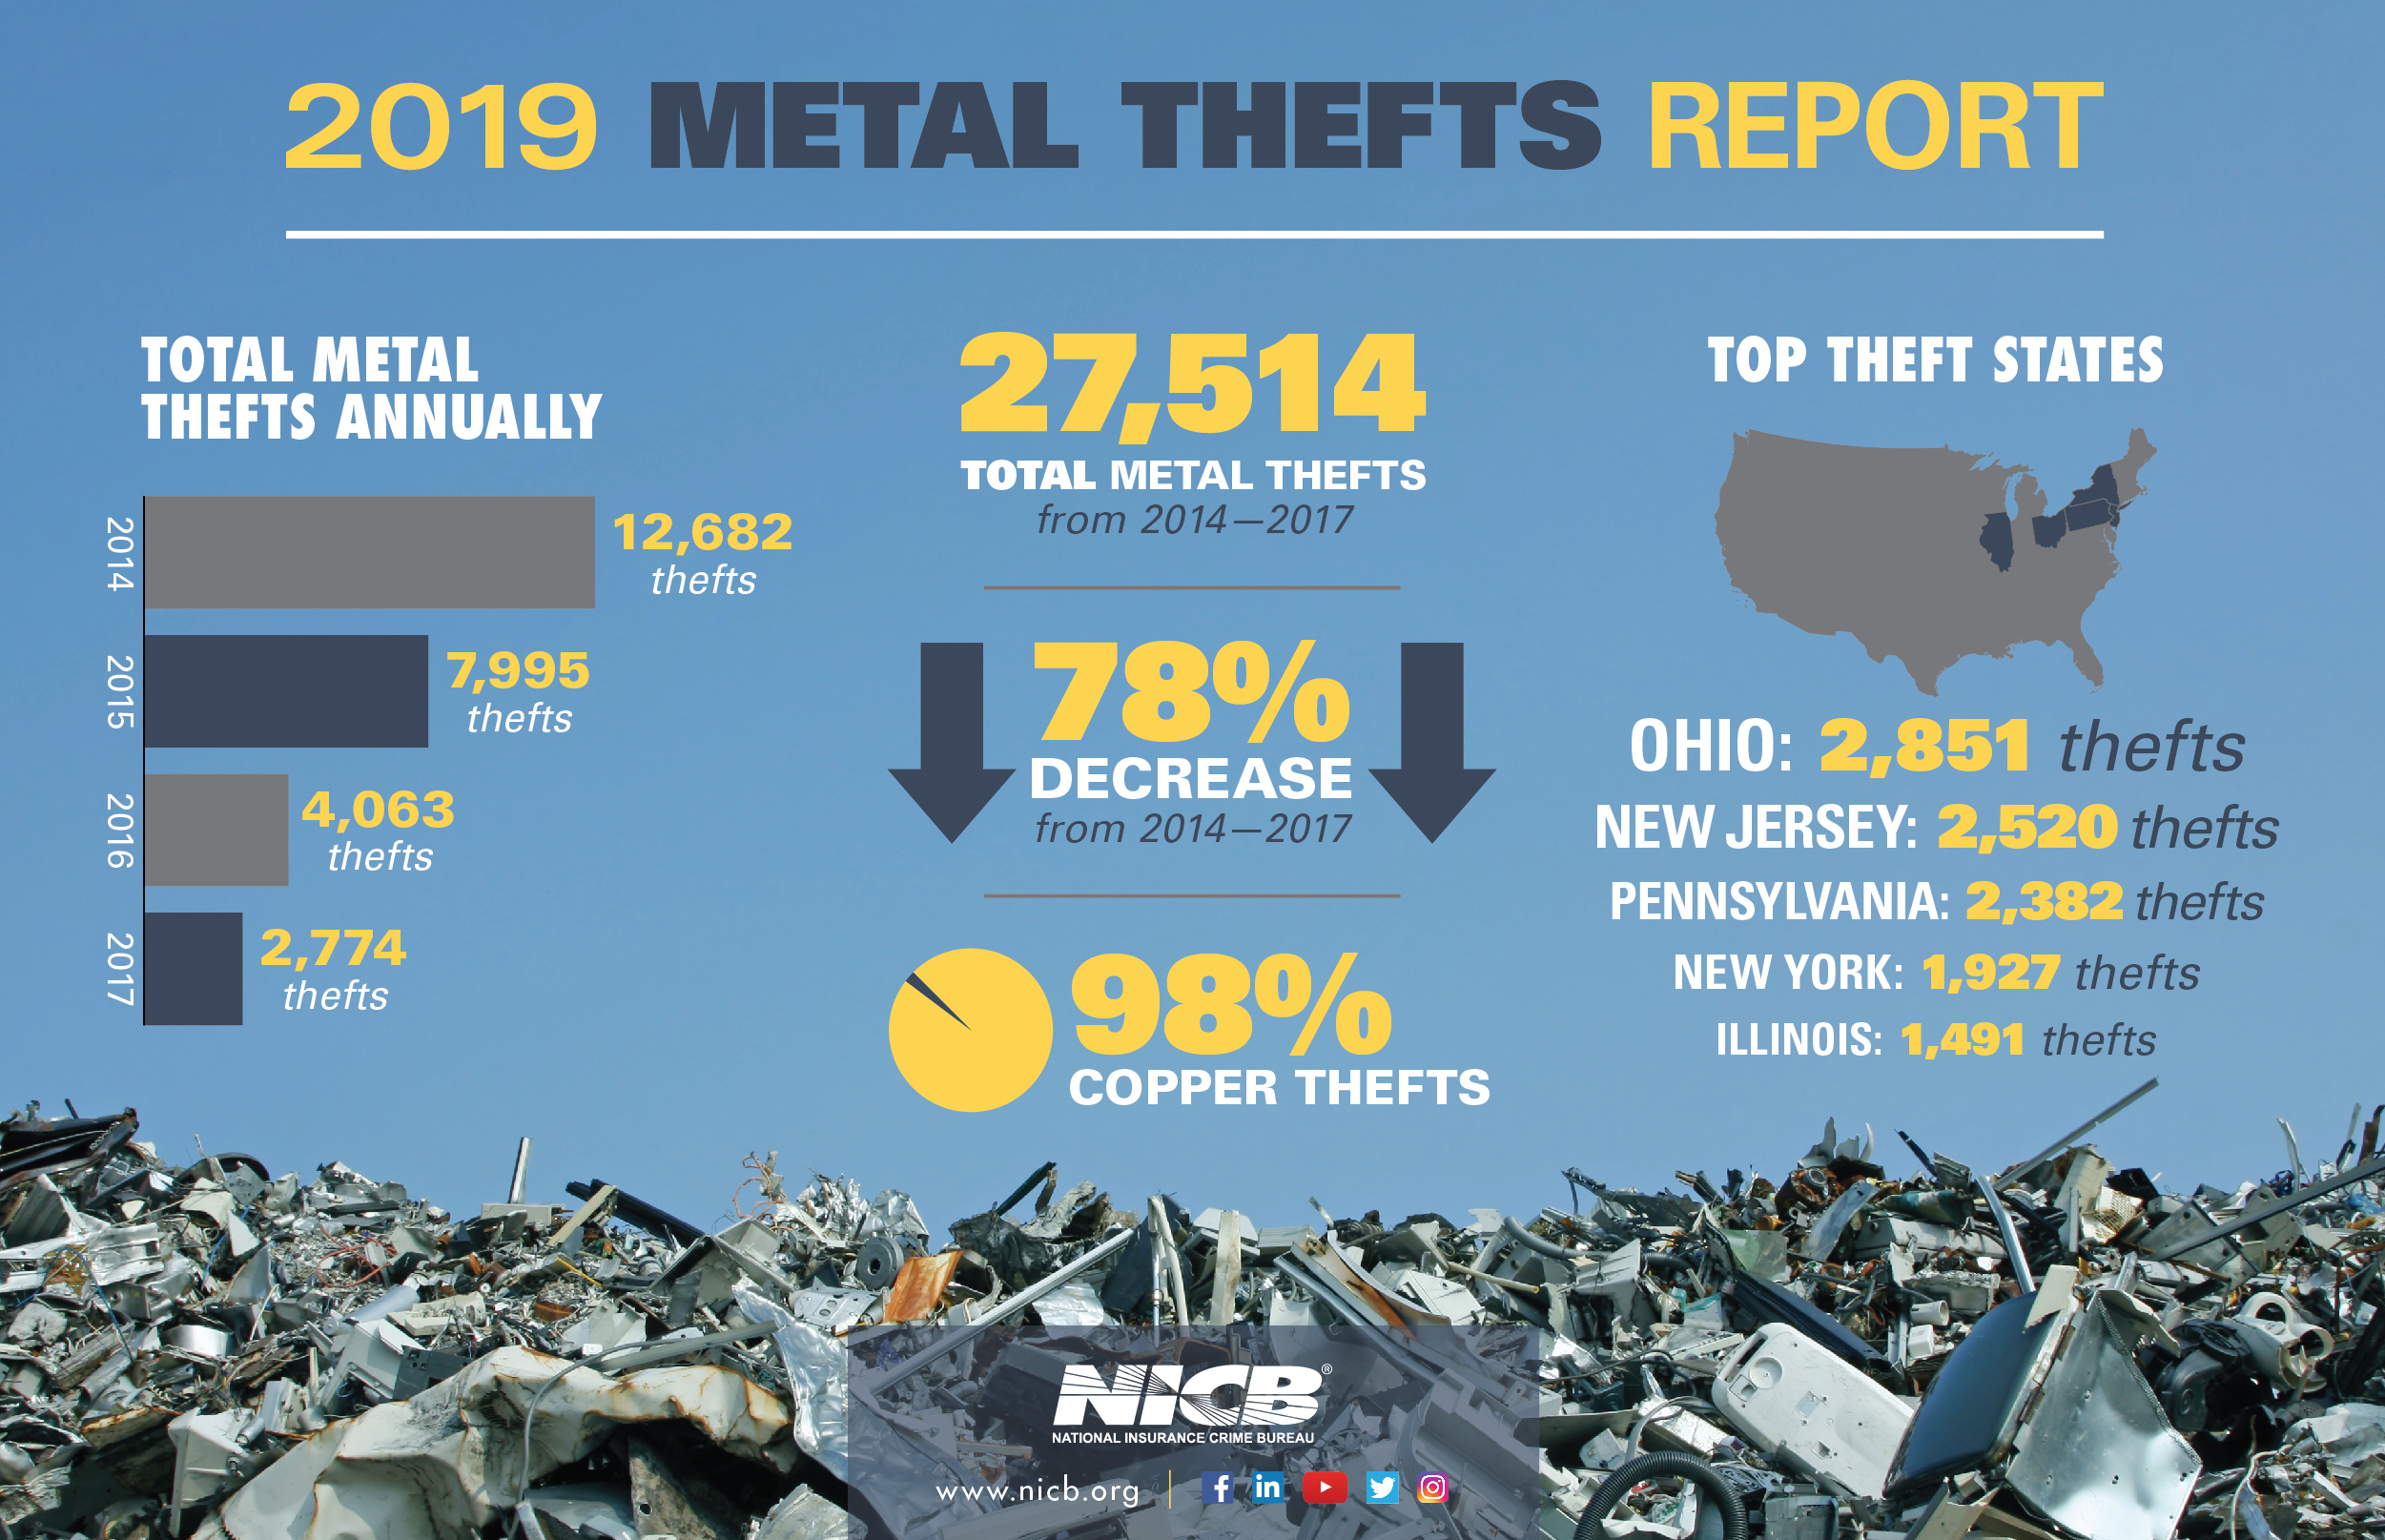 2019 Metal Theft Report Infographic